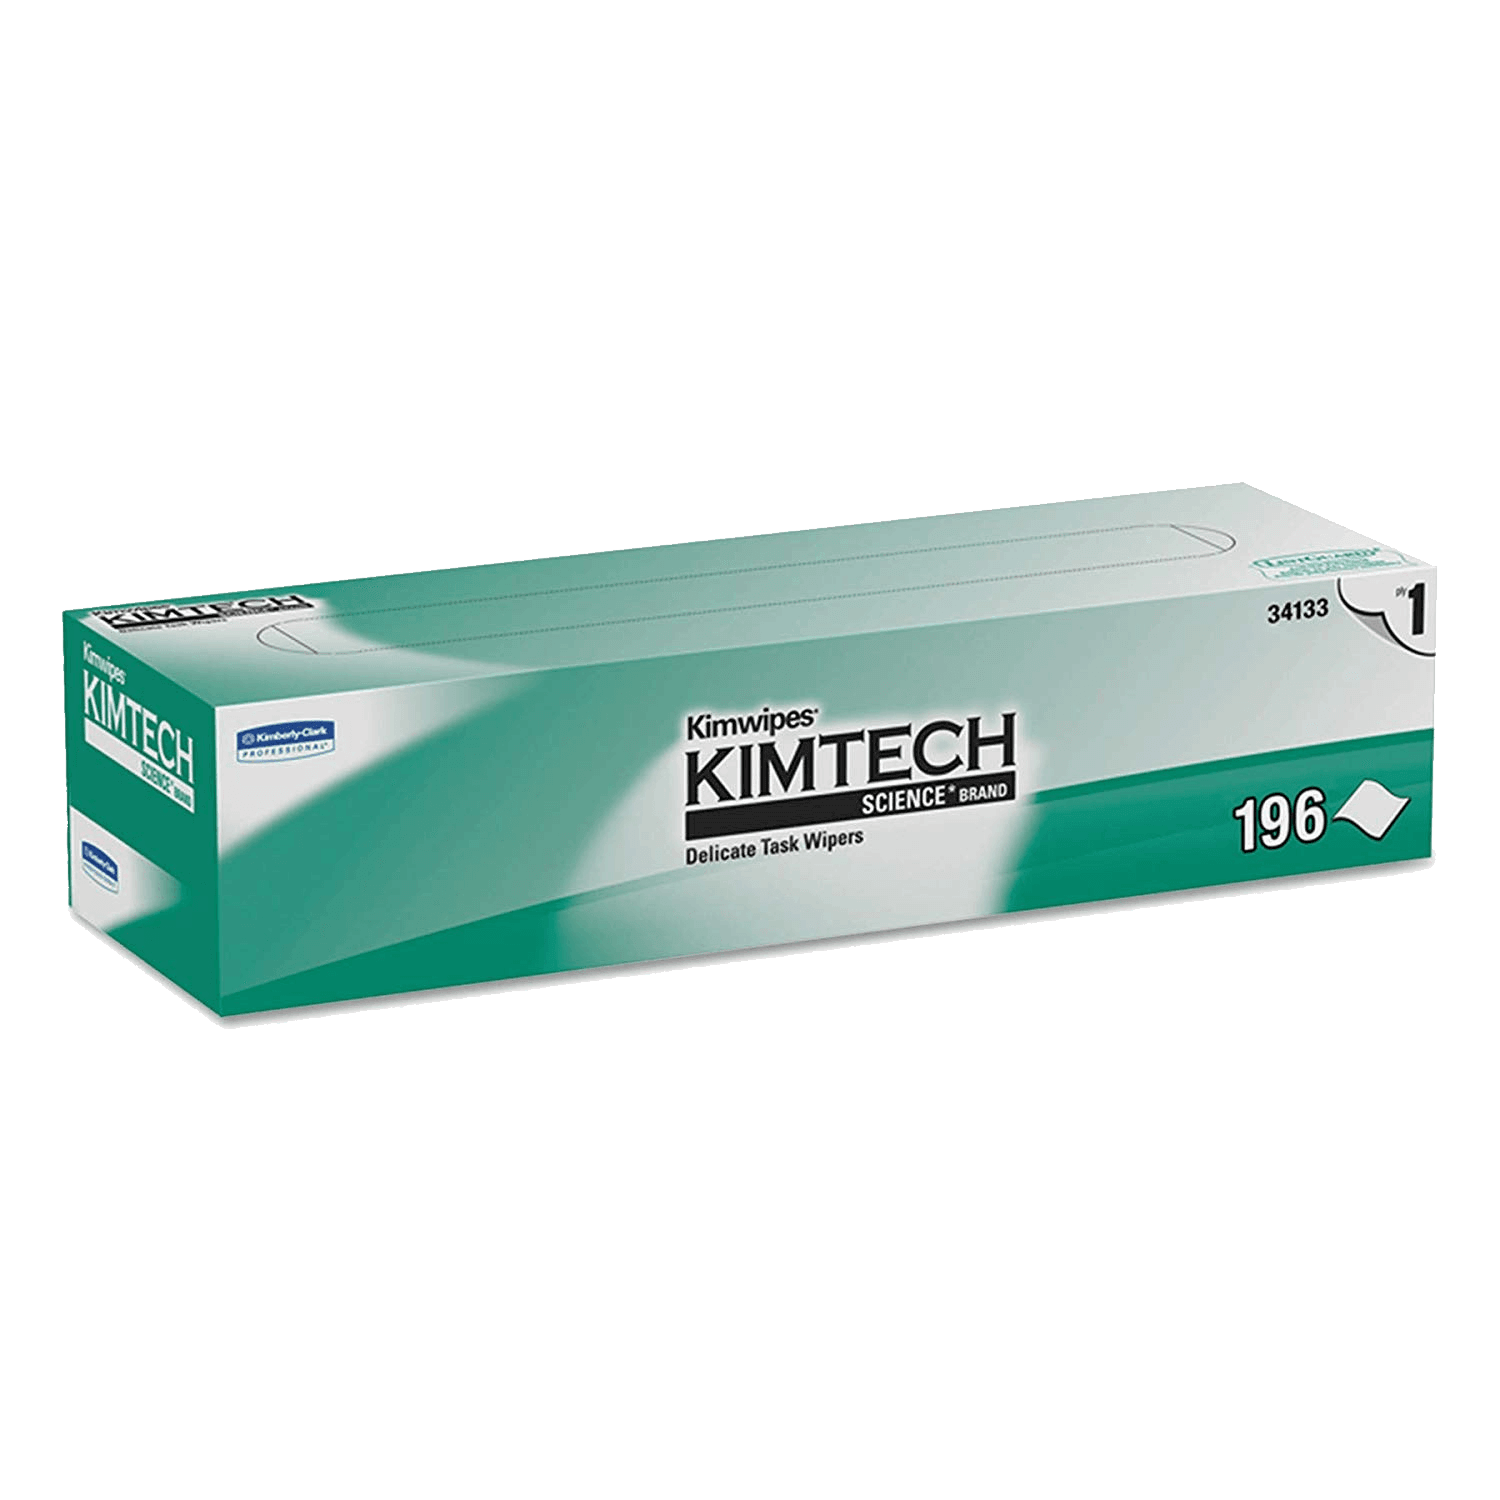 Kimwipes Lint-Free Wipers - 280 Wipers/Box